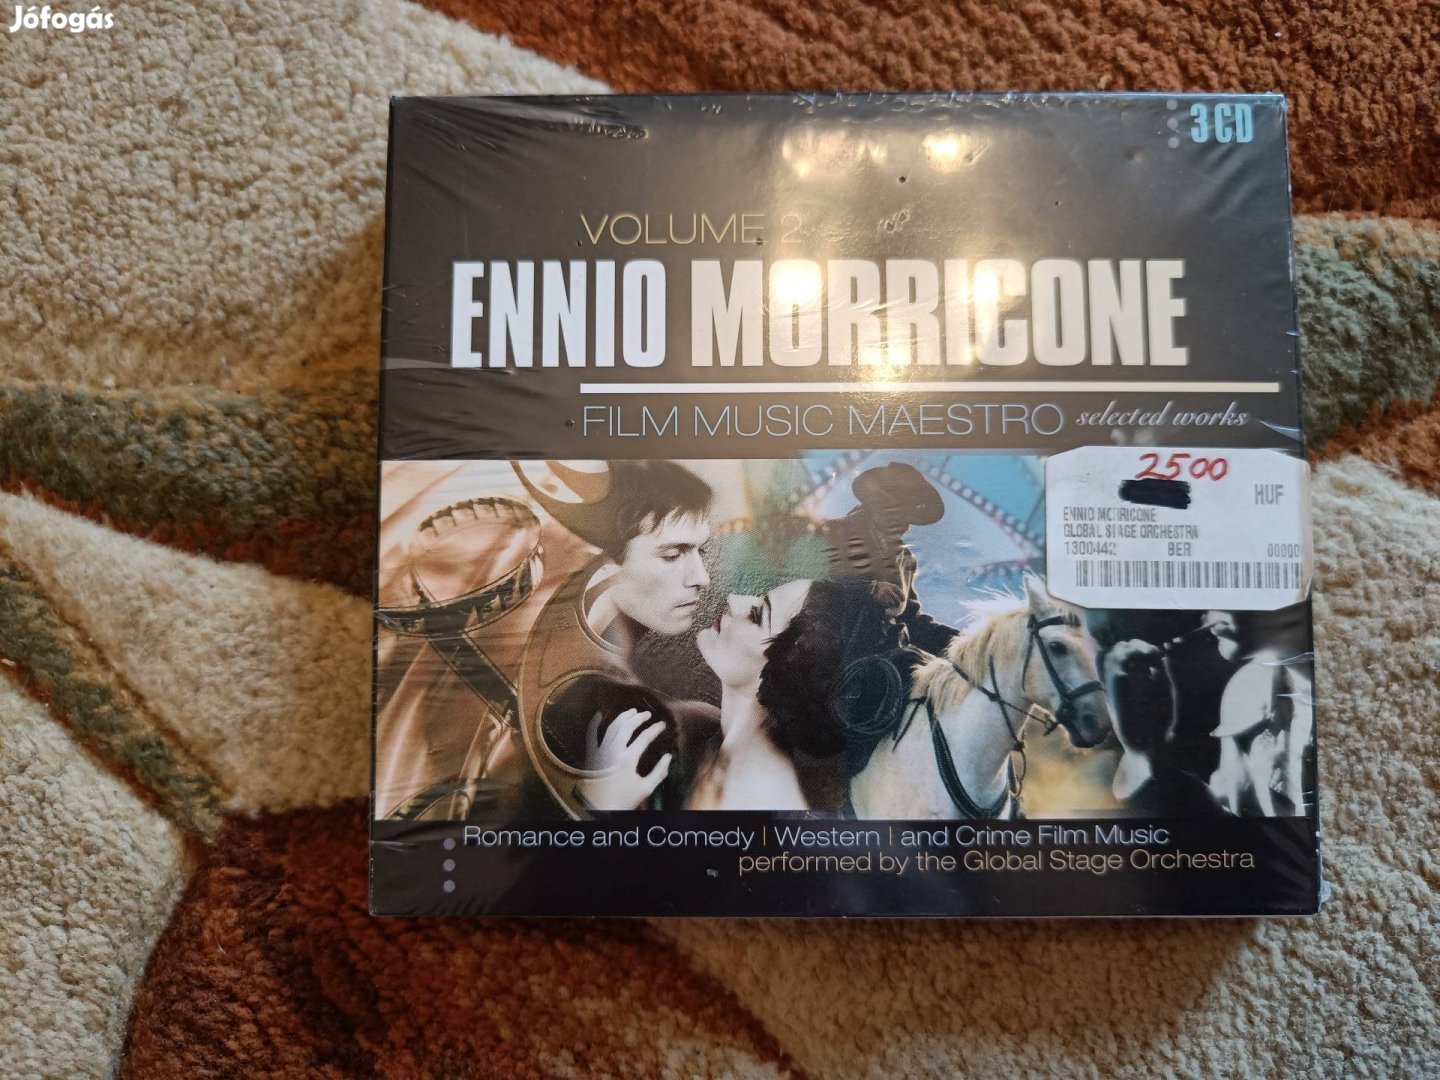 Ennio Morricone film music maestro volume 2, 3 db os cd